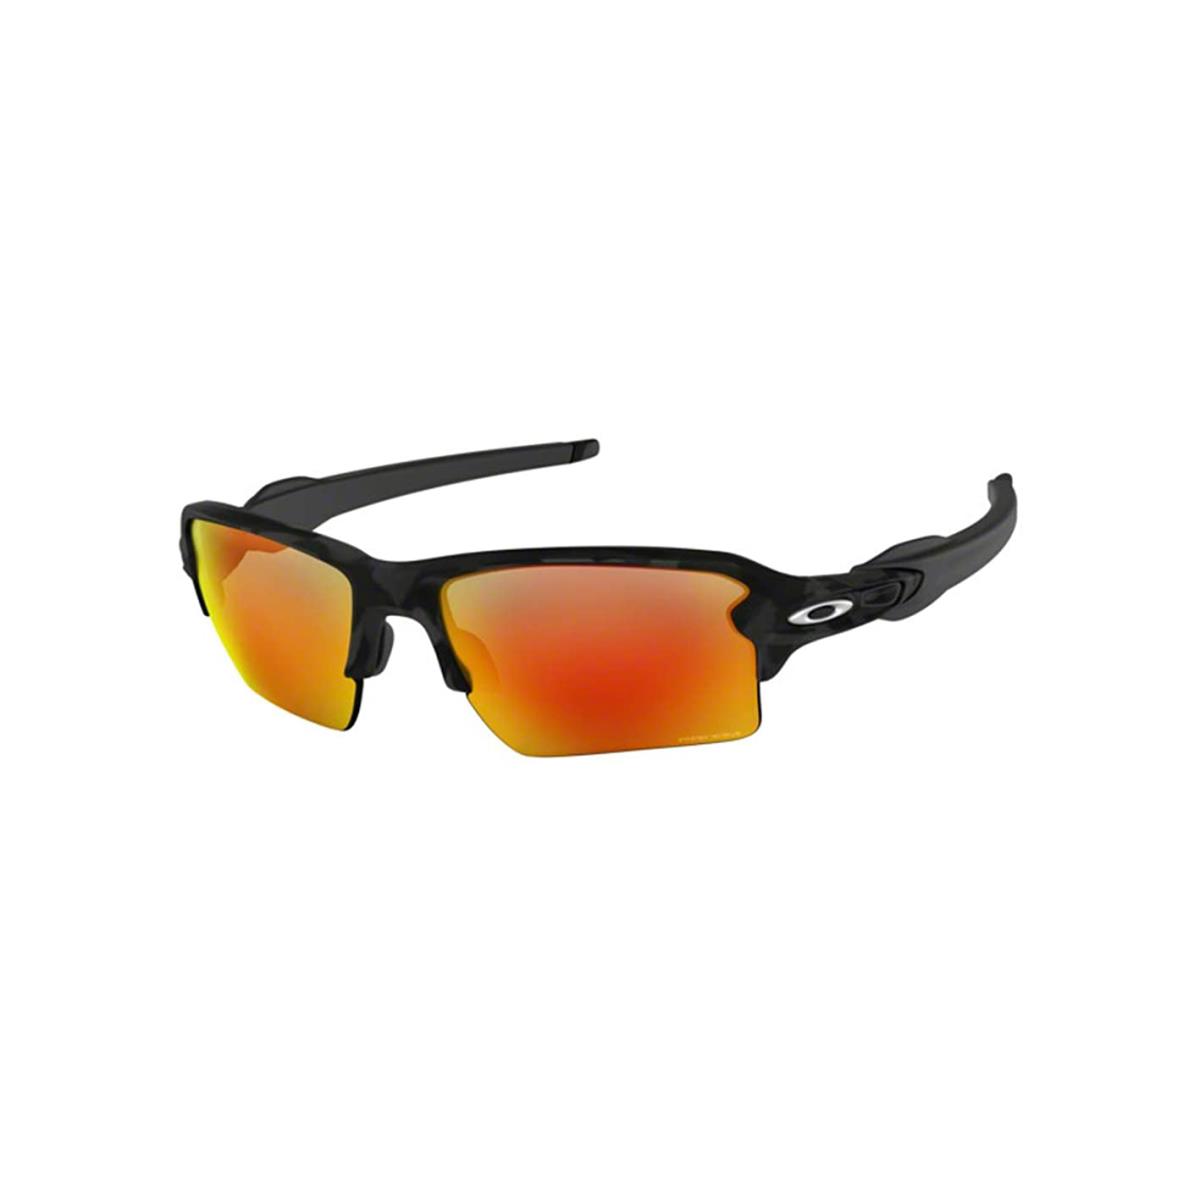 Oakley Flak 2.0 XL Sunglasses - Frame: Polished White, Lens: Prizm Ruby